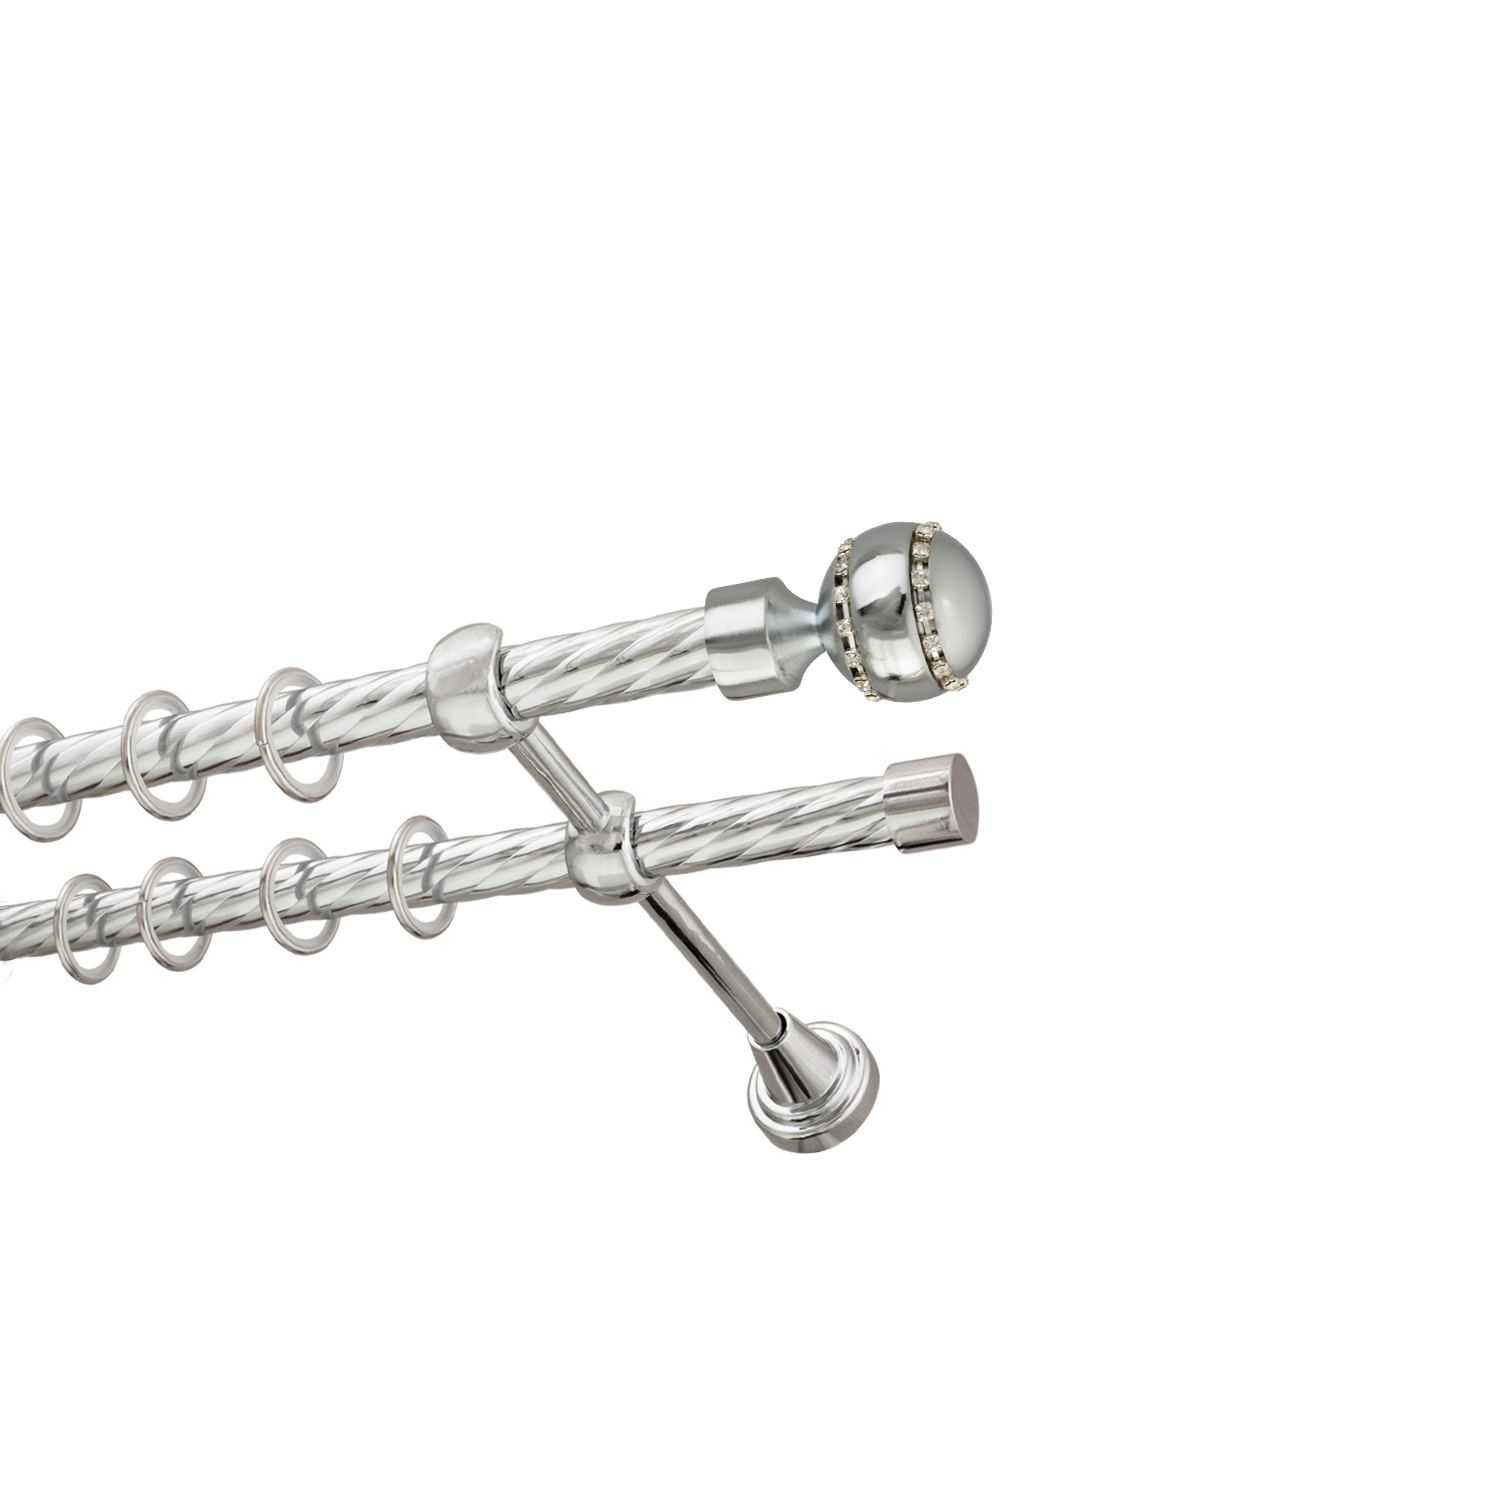 Металлический карниз для штор Модерн, двухрядный 16/16 мм, серебро, витая штанга, длина 300 см - фото Wikidecor.ru